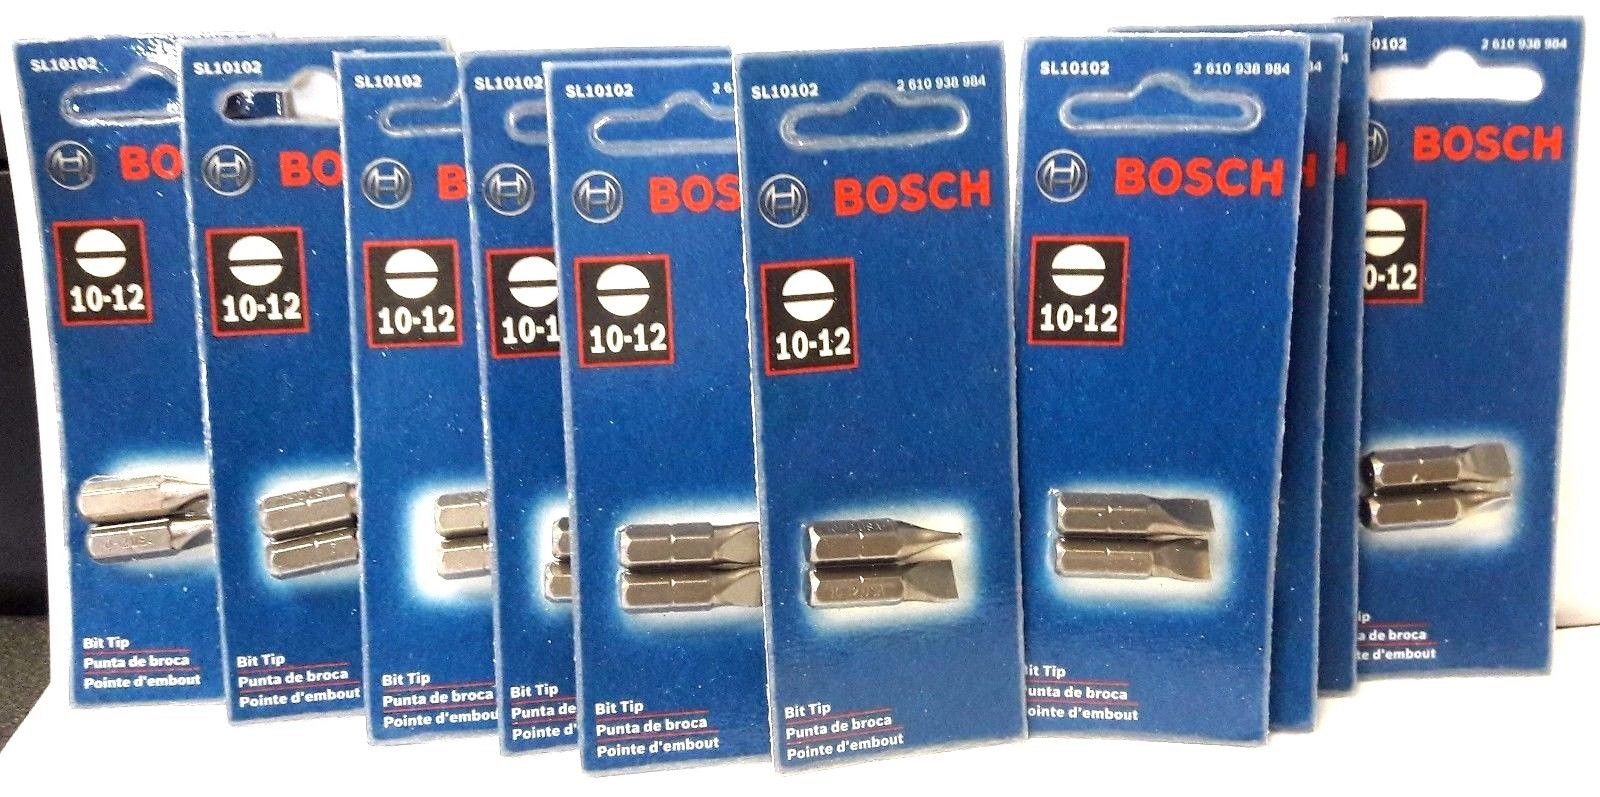 Bosch SL10102 10-12 1" Slotted Insert Bit USA 10-2 Packs